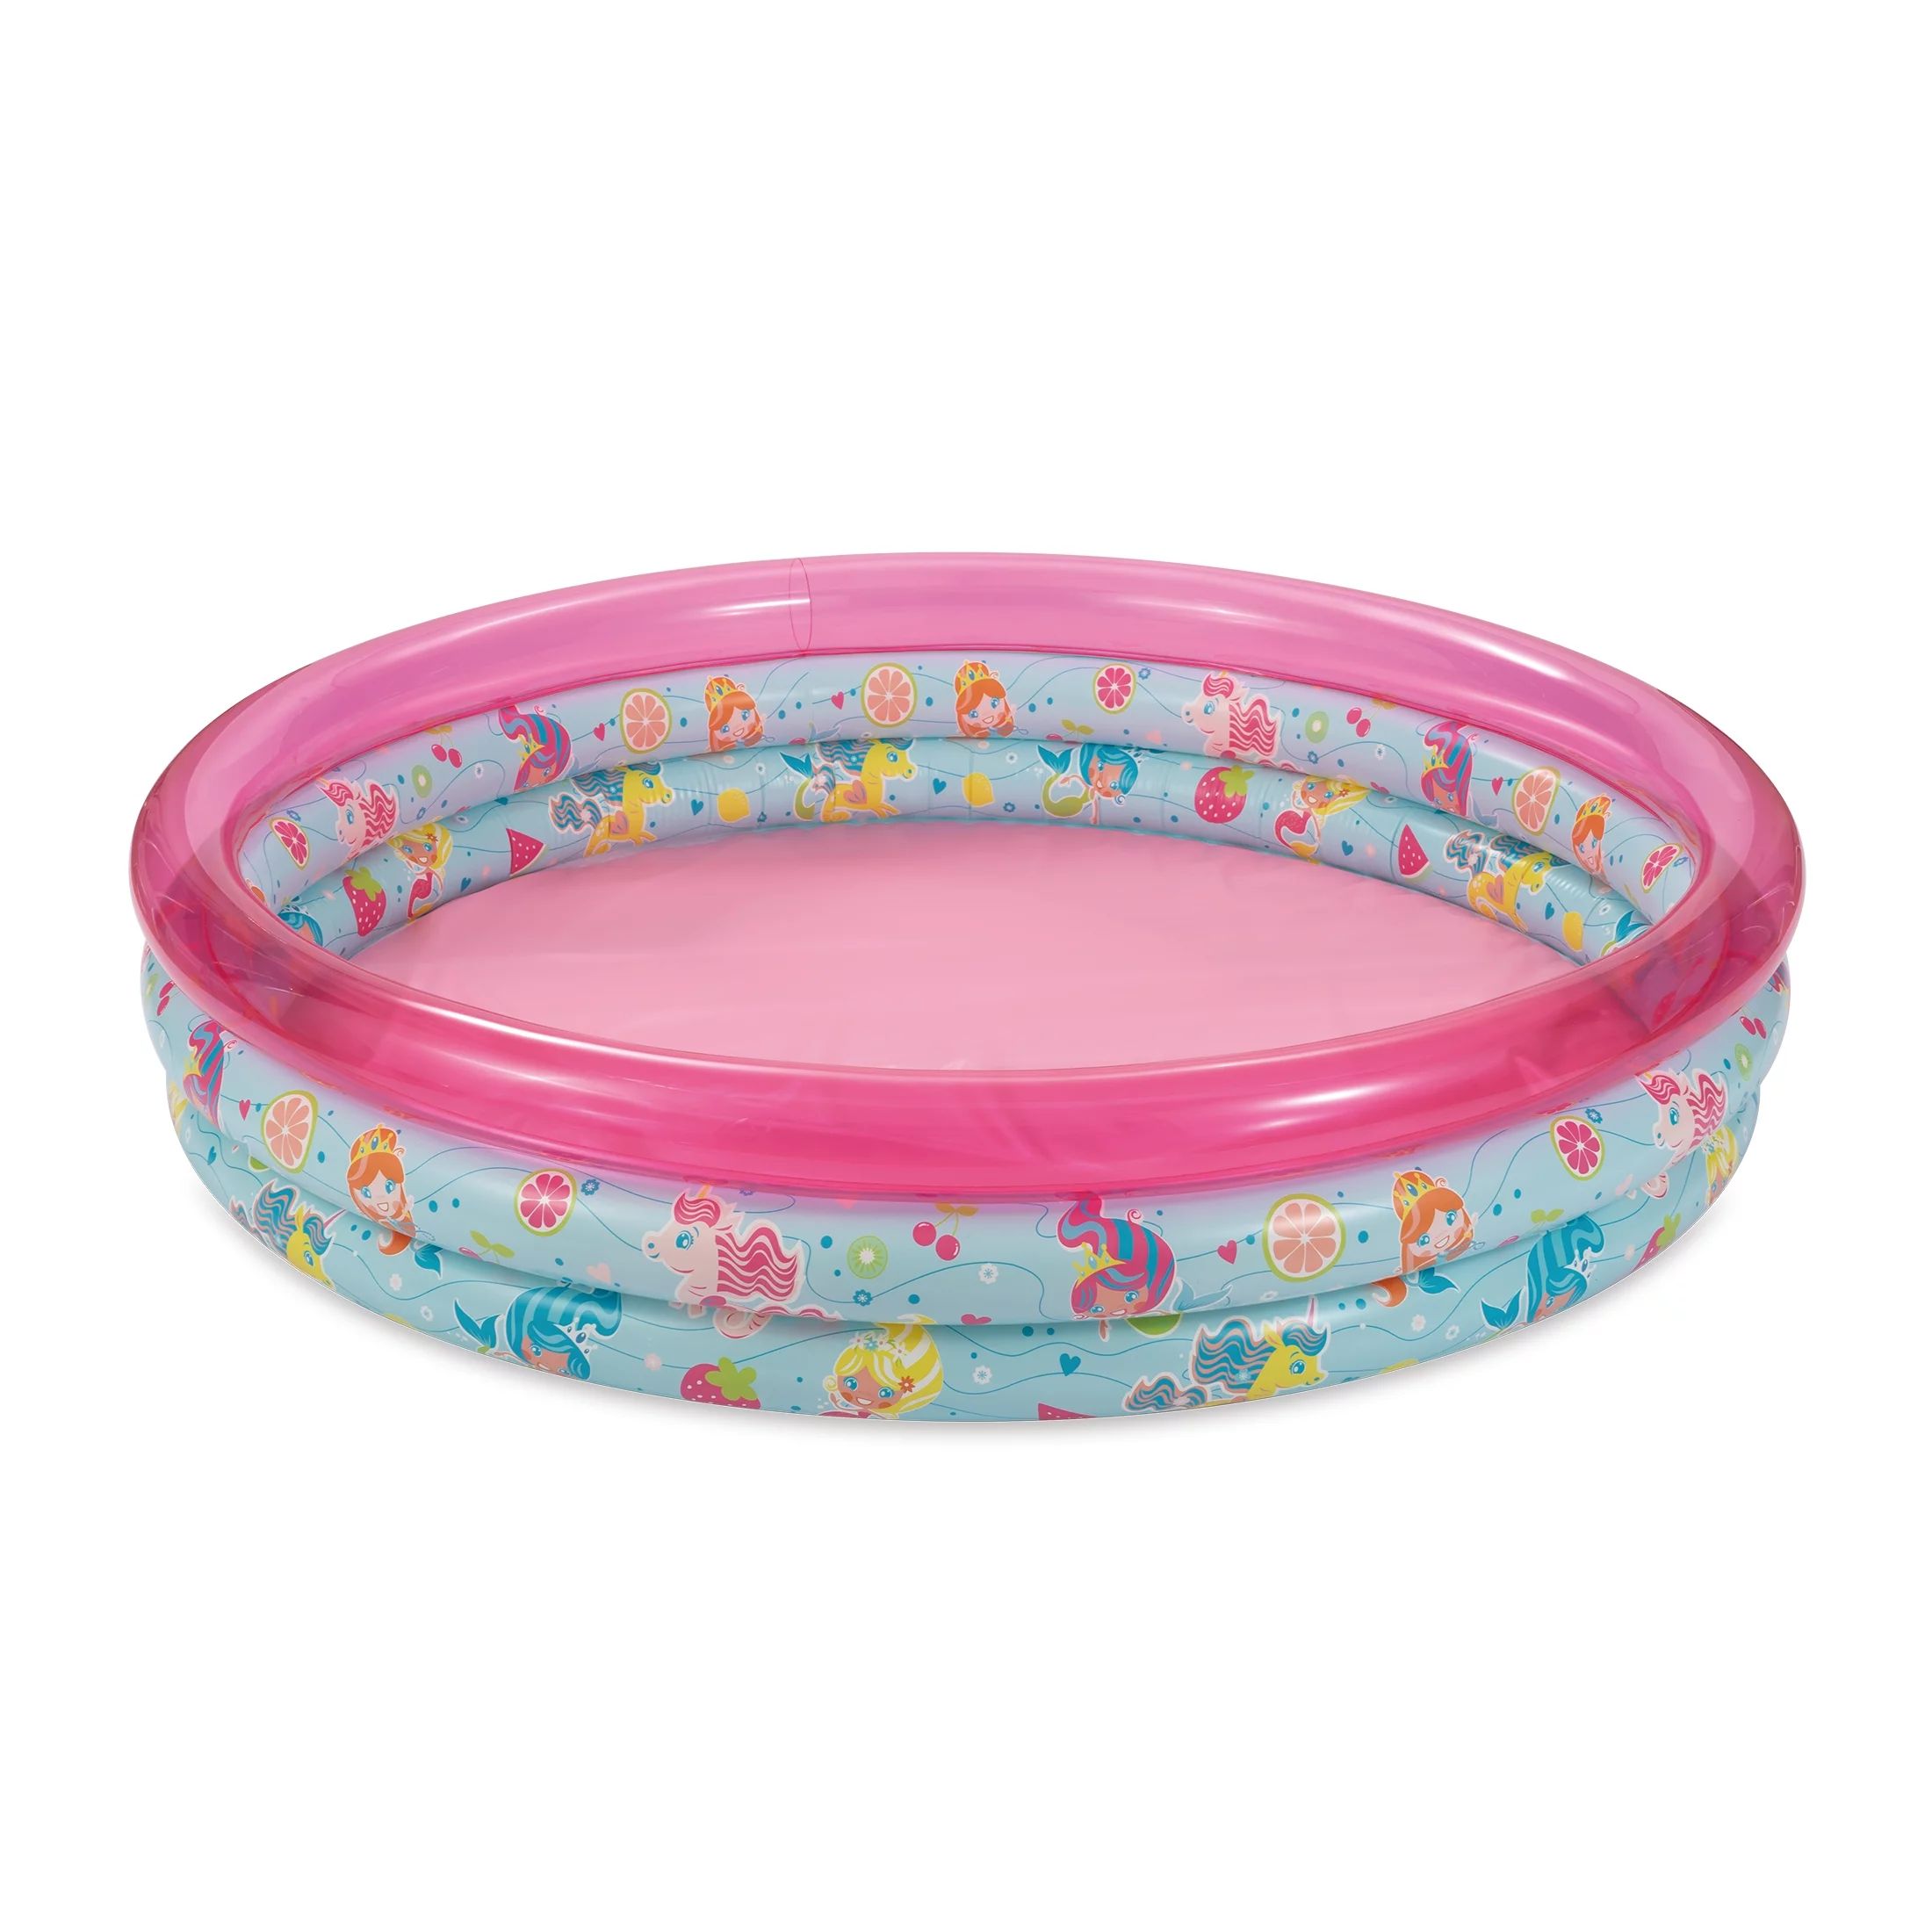 Round Inflatable 3-Ring Kiddie Splash Play Pool, Pink, For Kids, Age 2 & up, Unisex | Walmart (US)